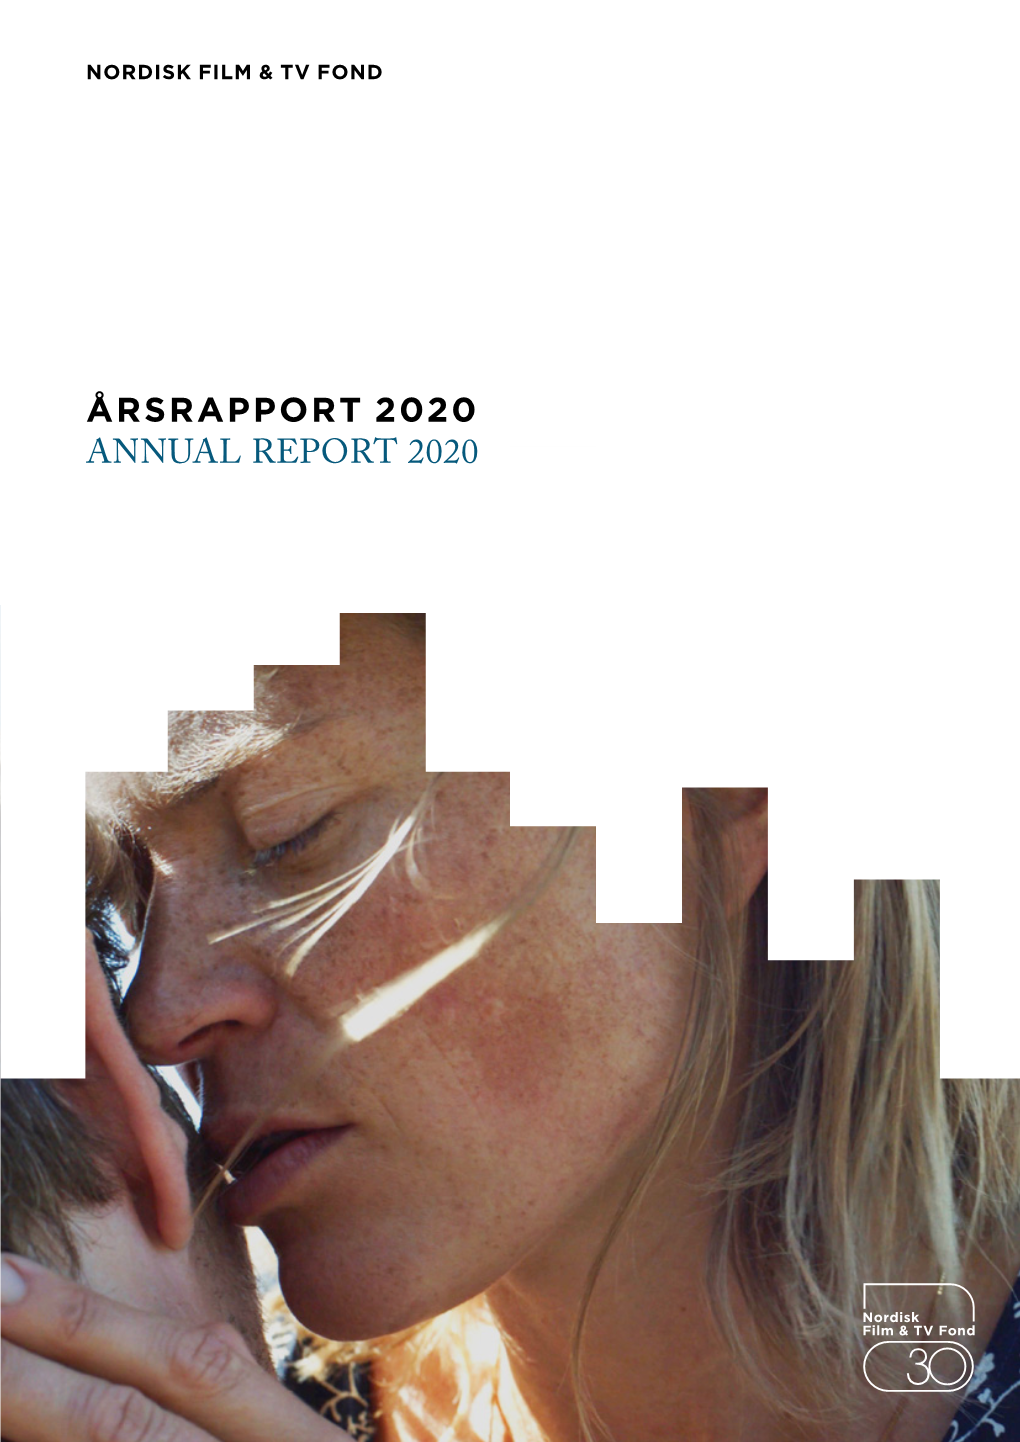 Årsrapport 2020 Annual Report 2020 Nftvf 2020 Nordisk Film & Tv Fond